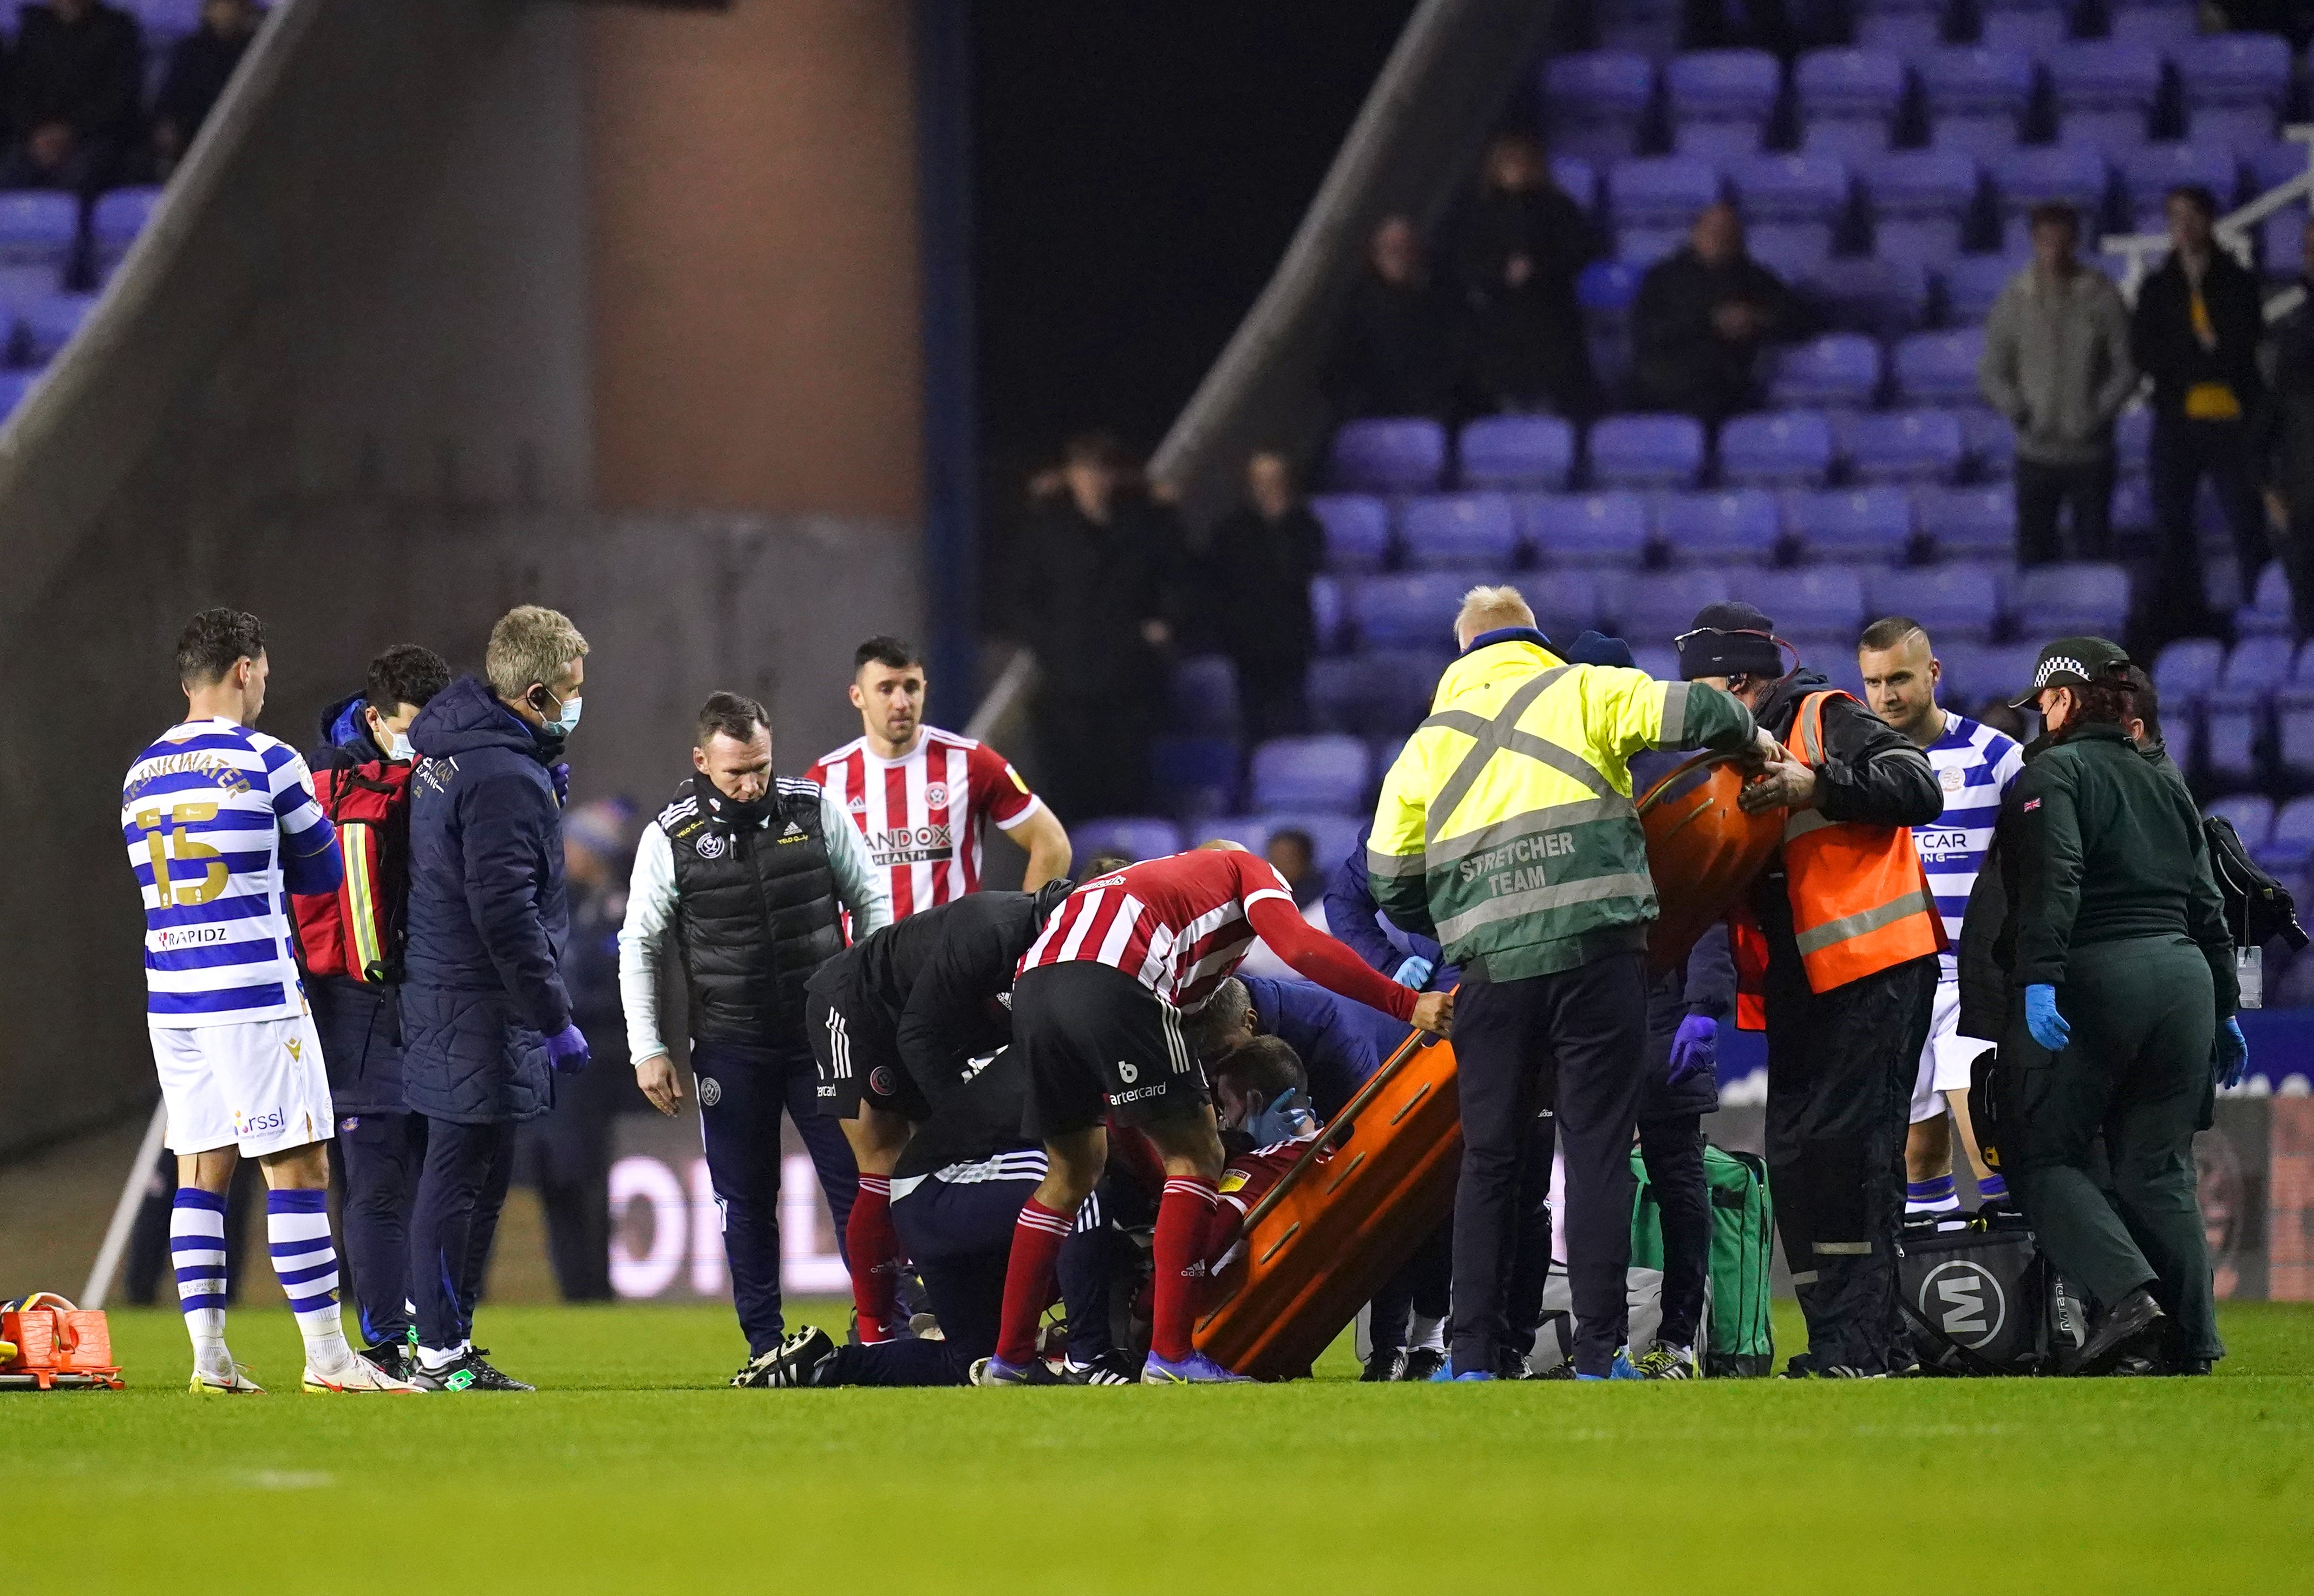 Sheffield United’s John Fleck was taken from the pitch on a stretcher (John Walton/PA)